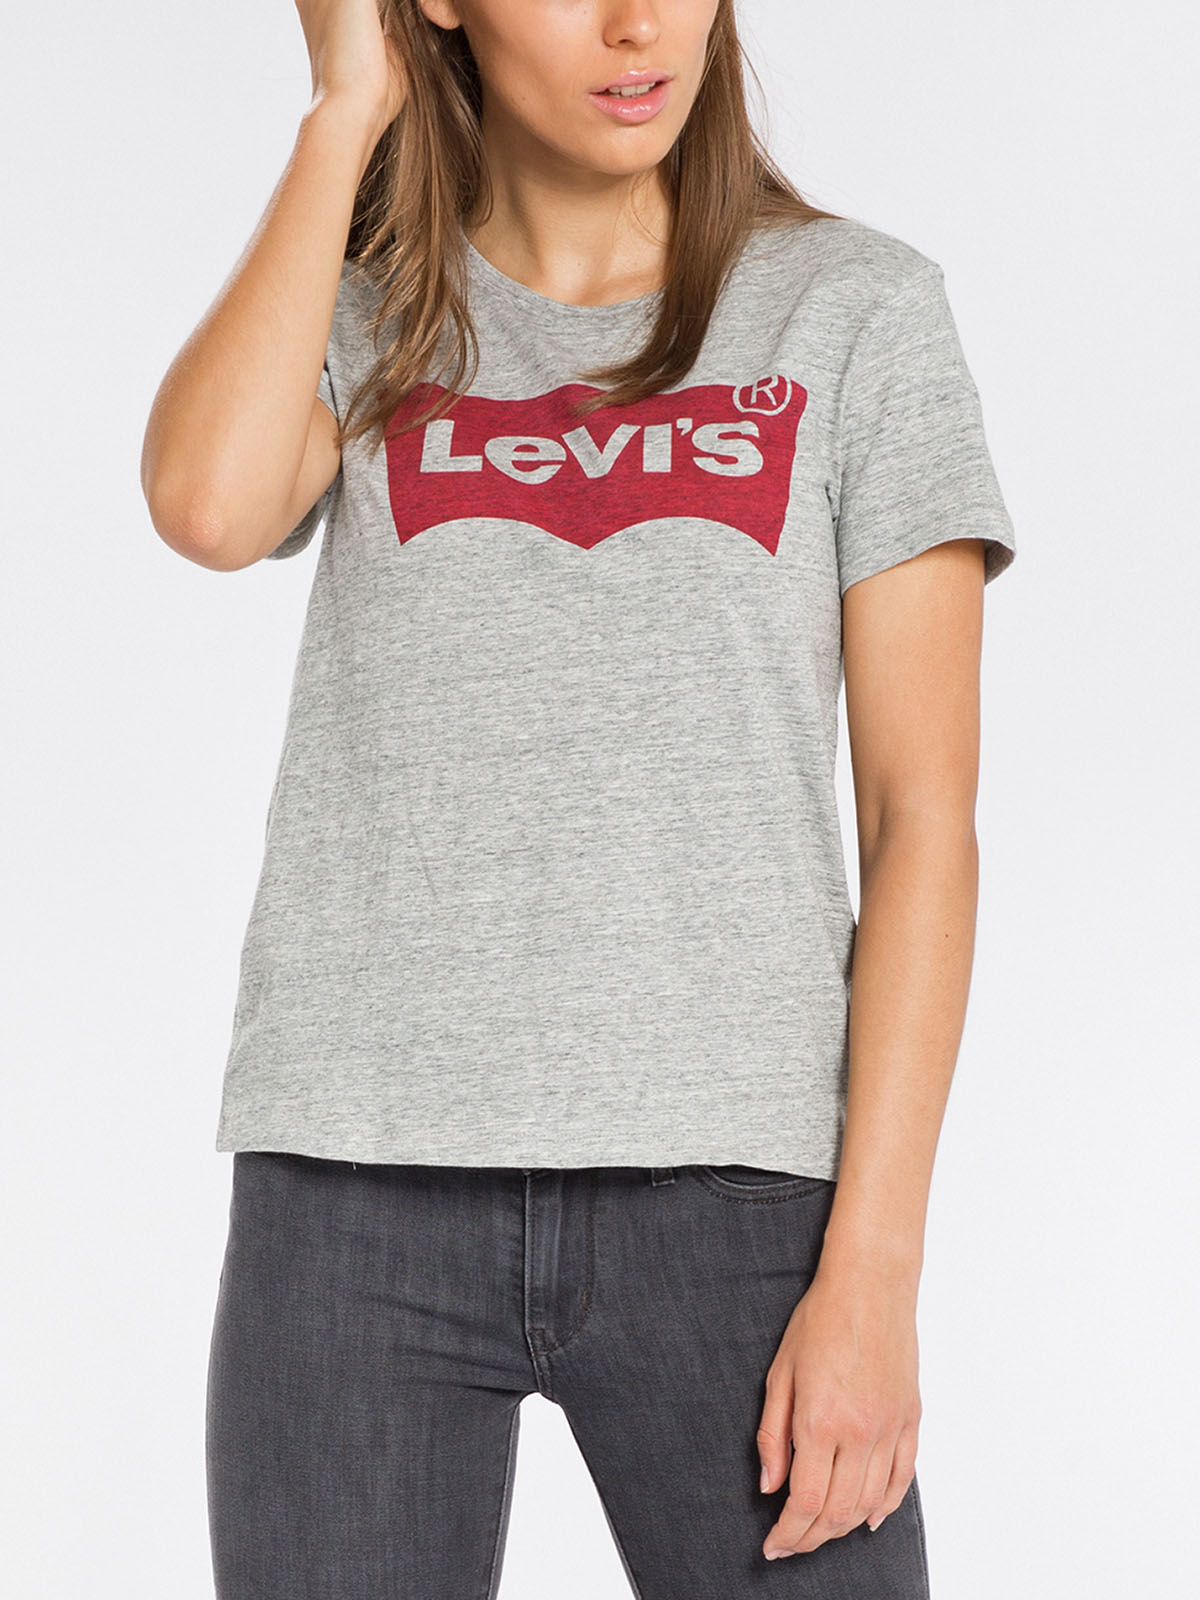 Levi's samarreta logo màniga curta dona 17369-0263 gris